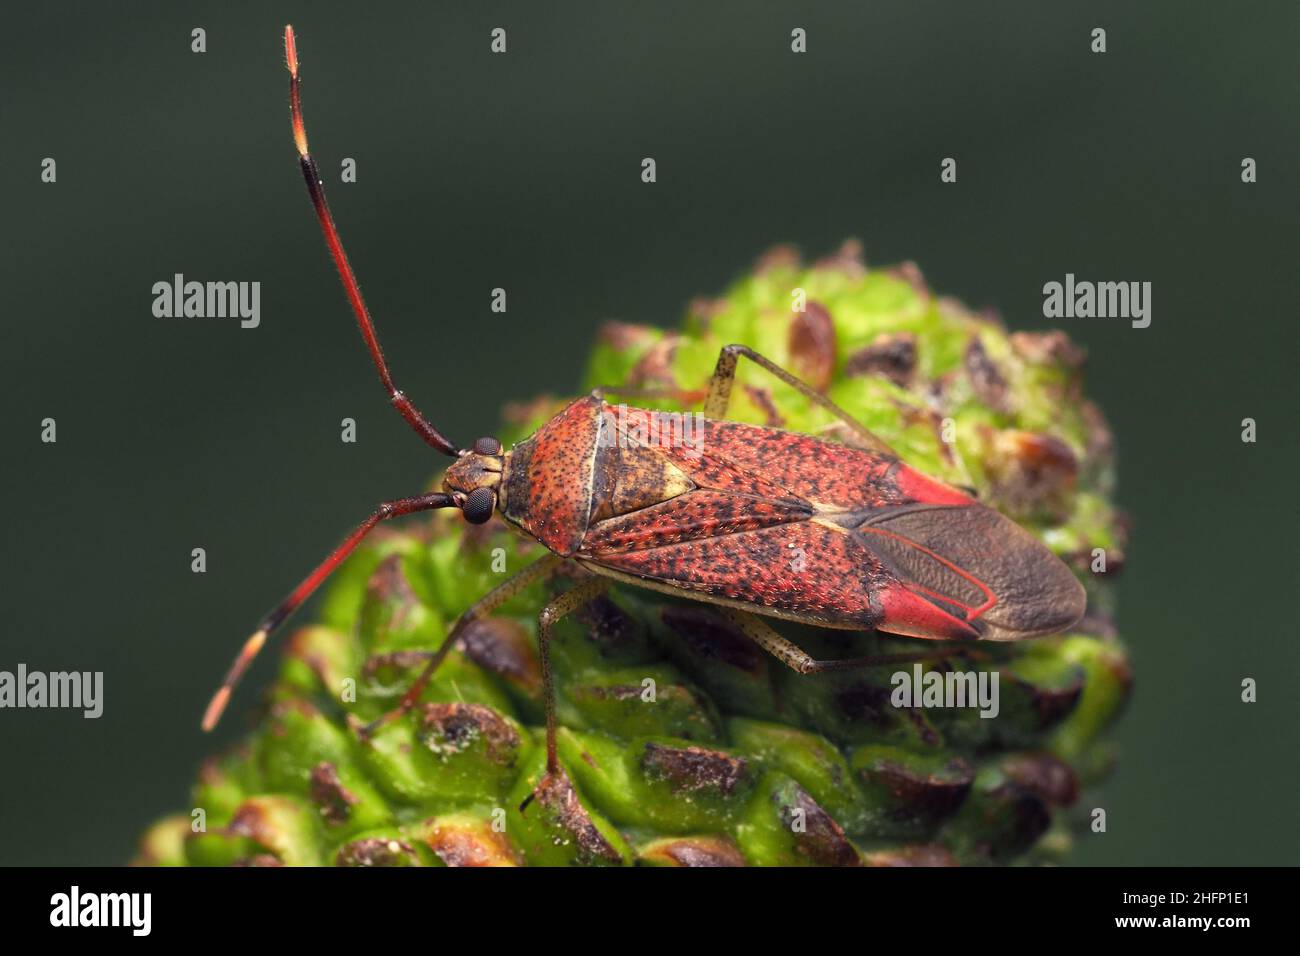 Pantilius tunicatus mirid bug perched on alder catkin. Tipperary, Ireland Stock Photo